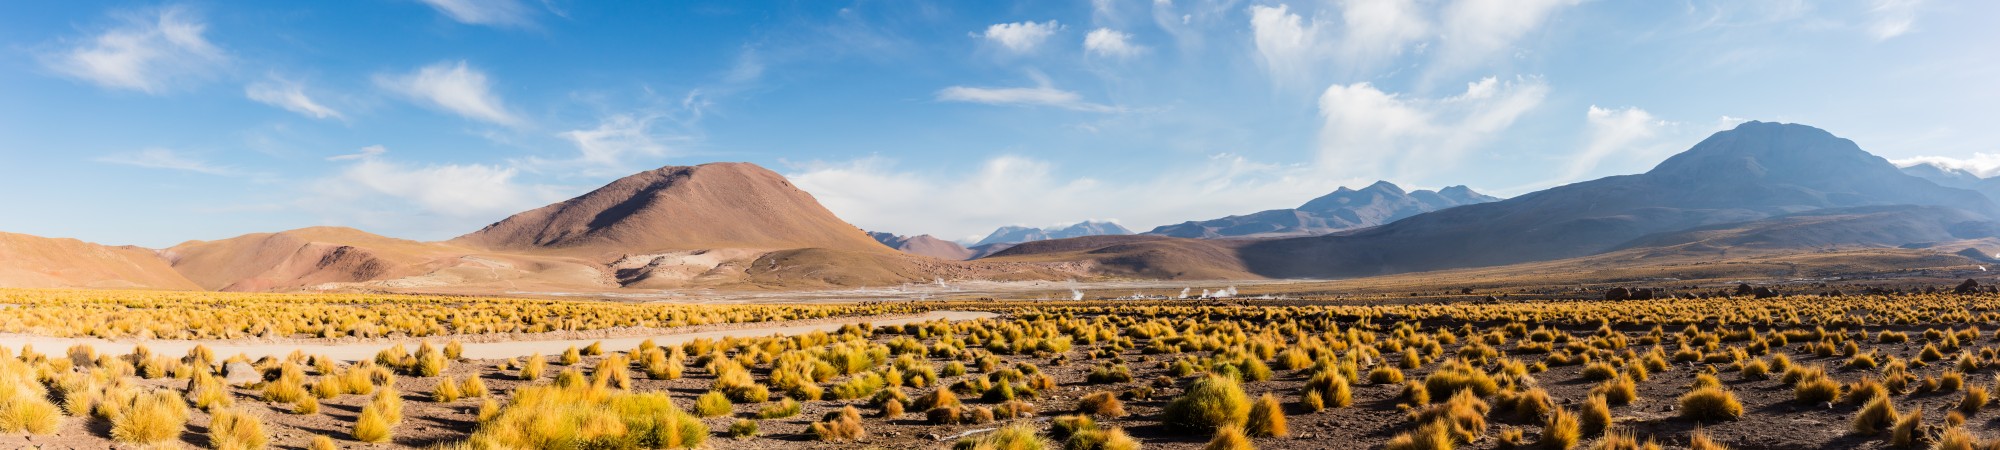 Géiseres del Tatio, Atacama, Chile, 2016-02-01, DD 74-77 PAN